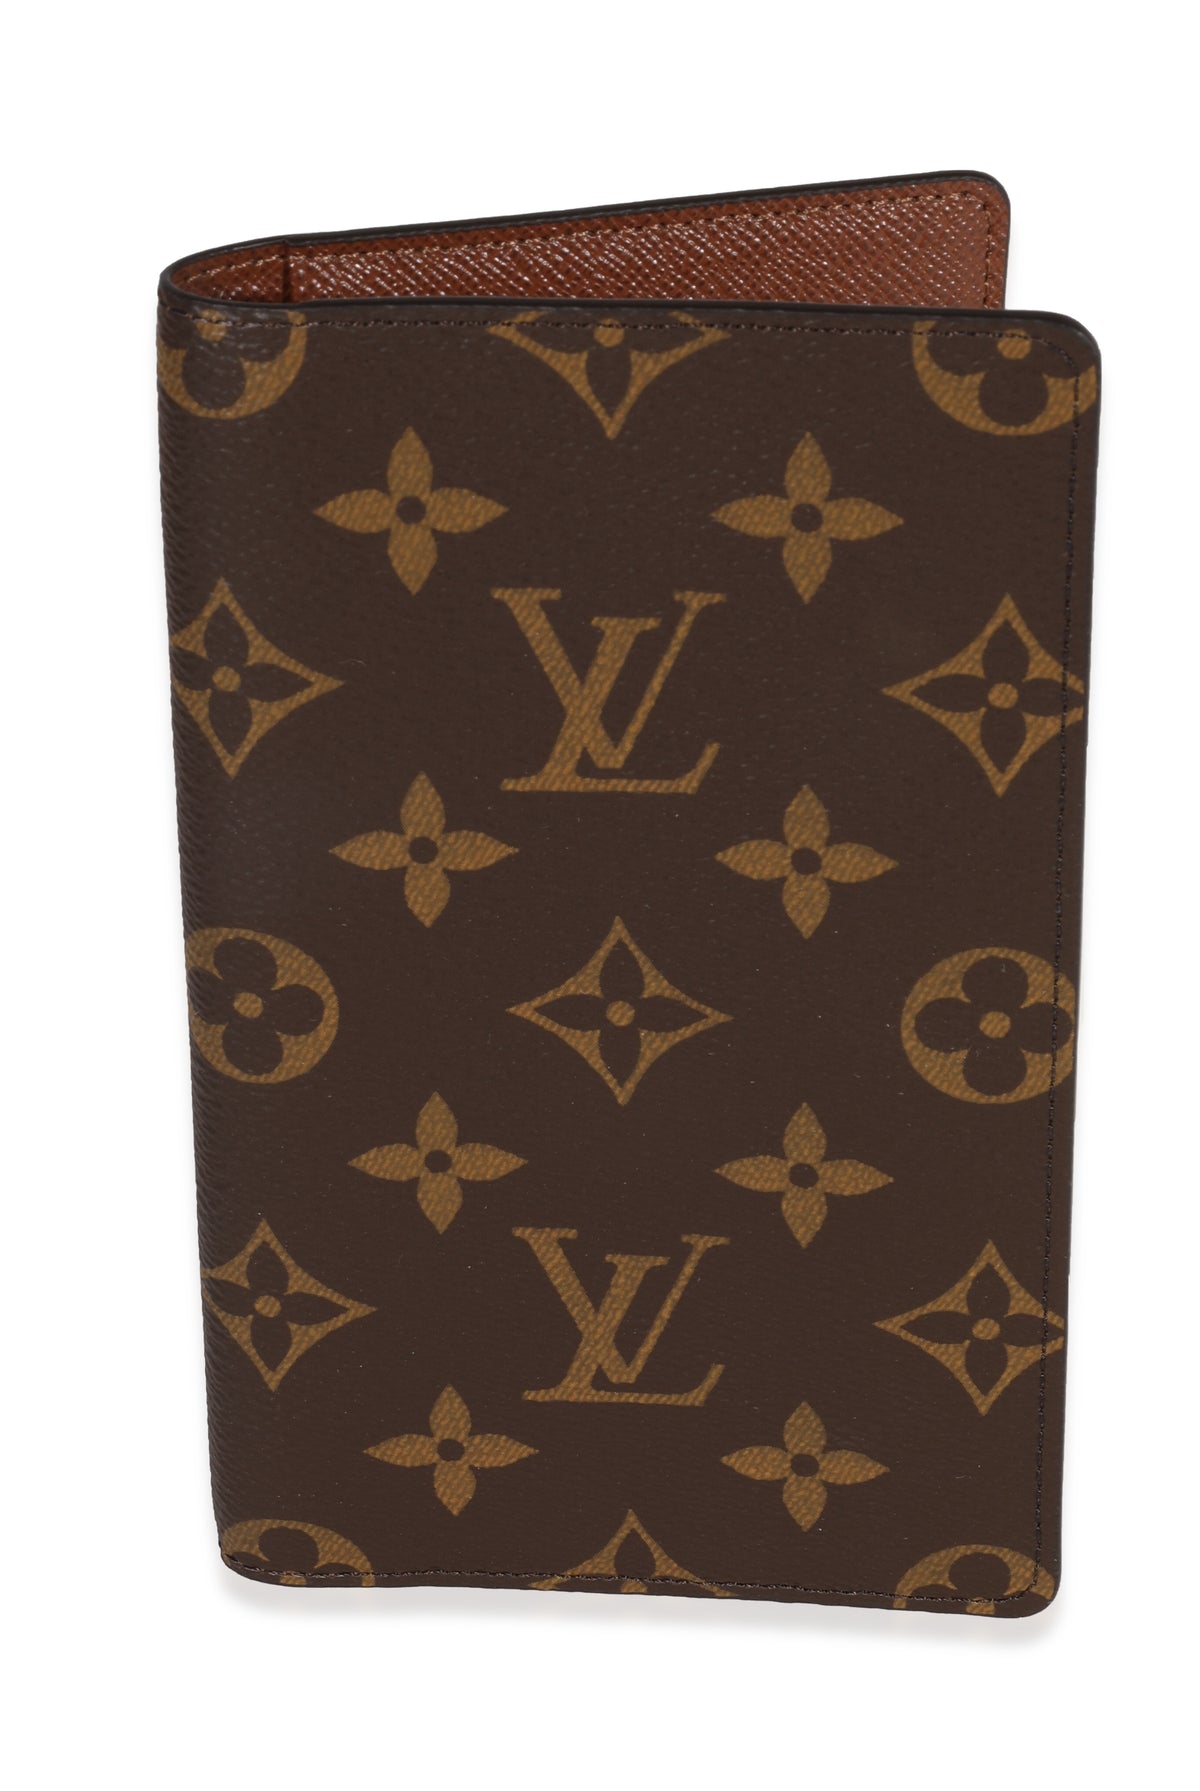 Louis Vuitton Pocket Agenda Cover in Monogram Canvas - SOLD